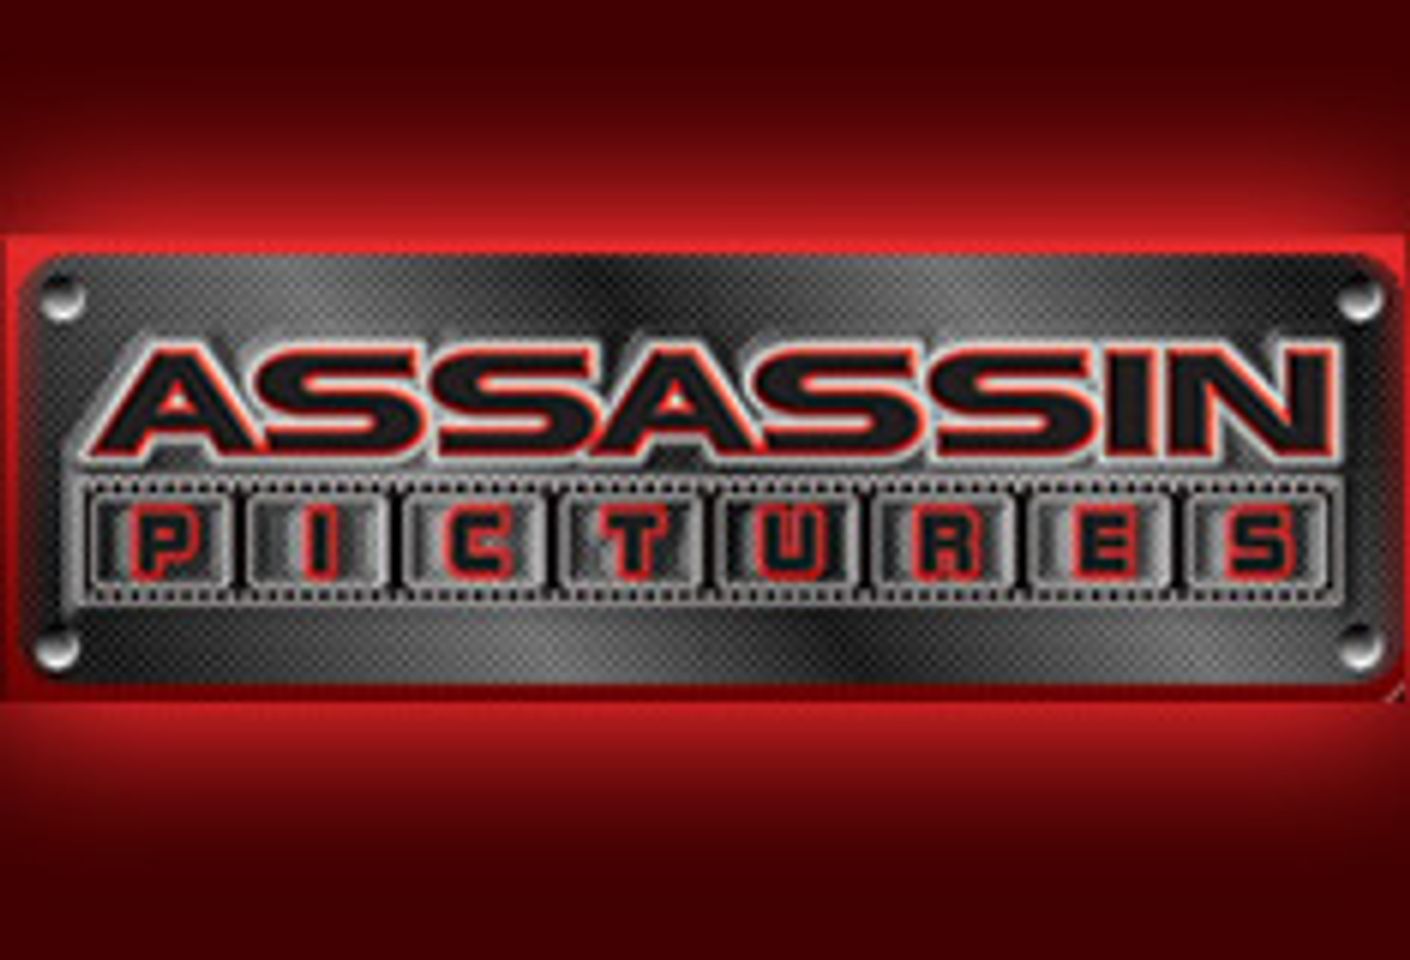 Assassin Pictures Adds PR Division